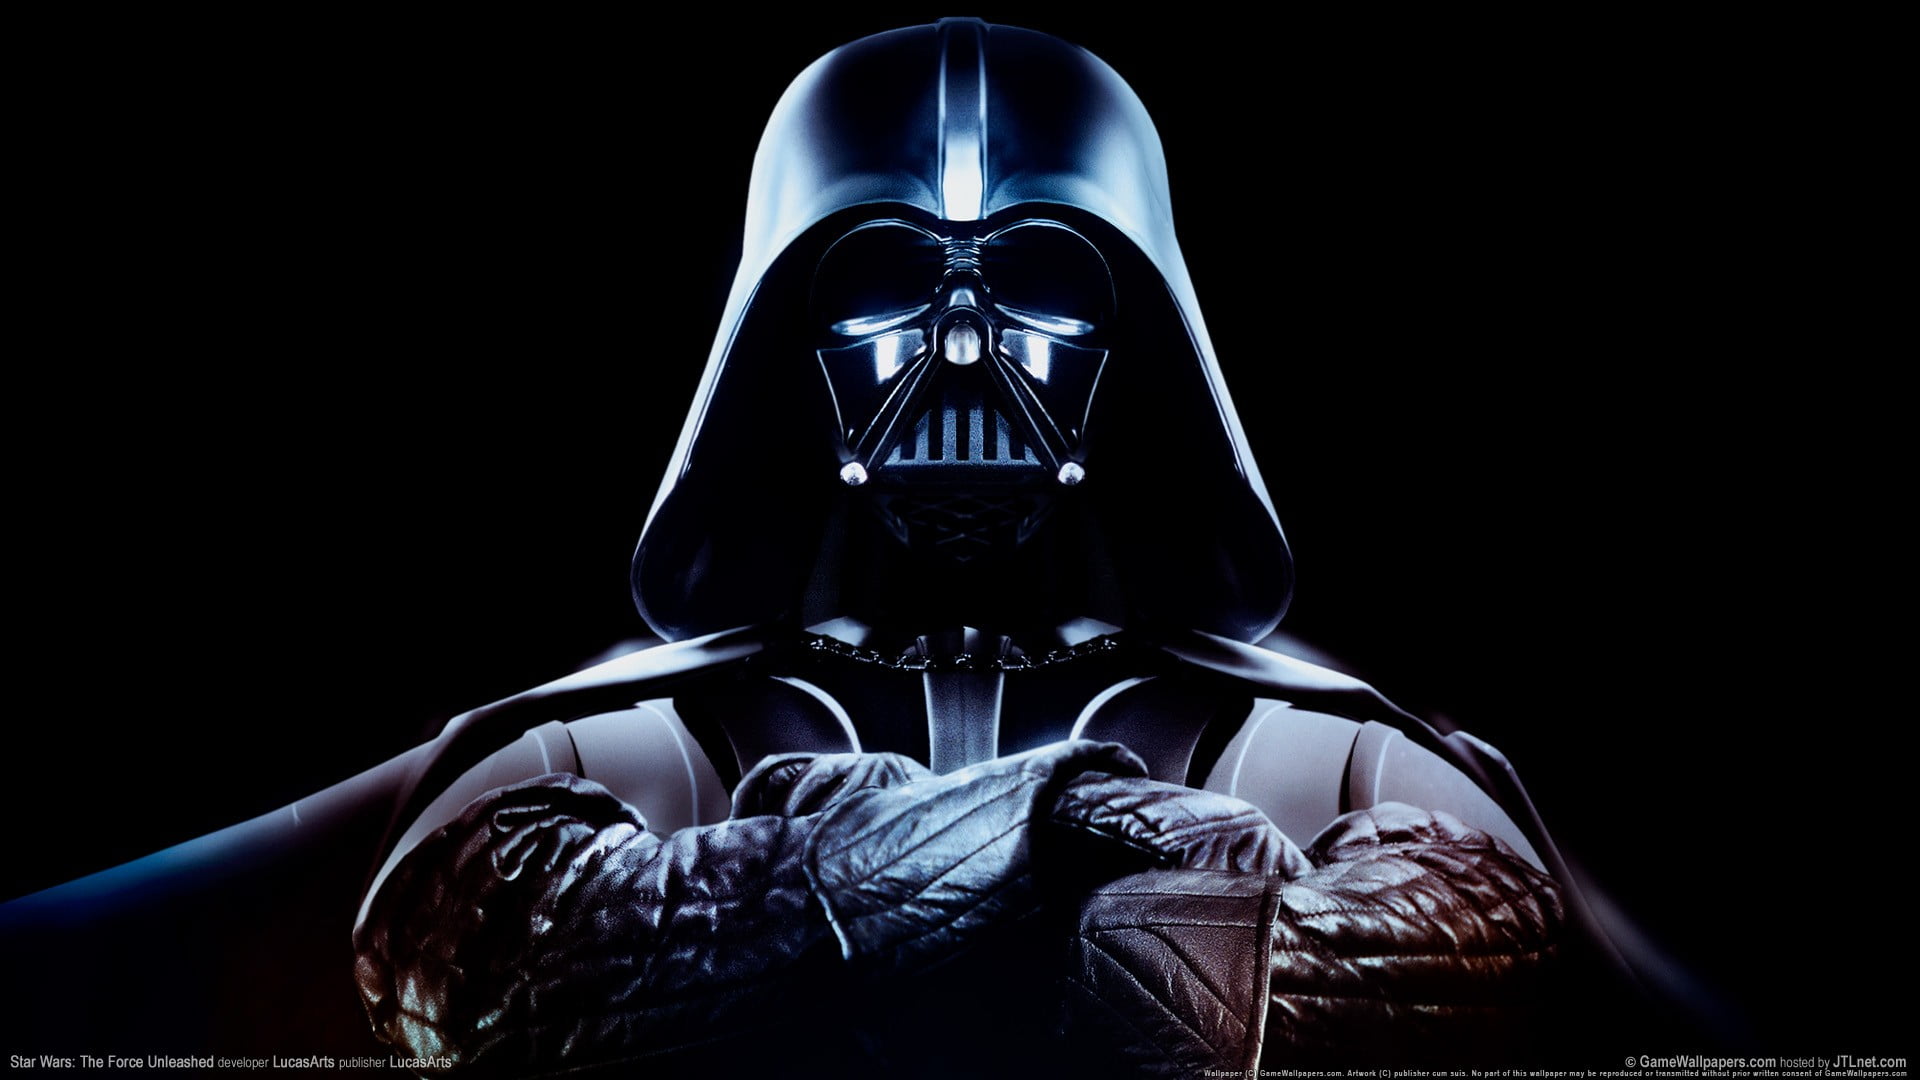 Star Wars Darth Vader graphic wallpaper, Sith, black Color, horror